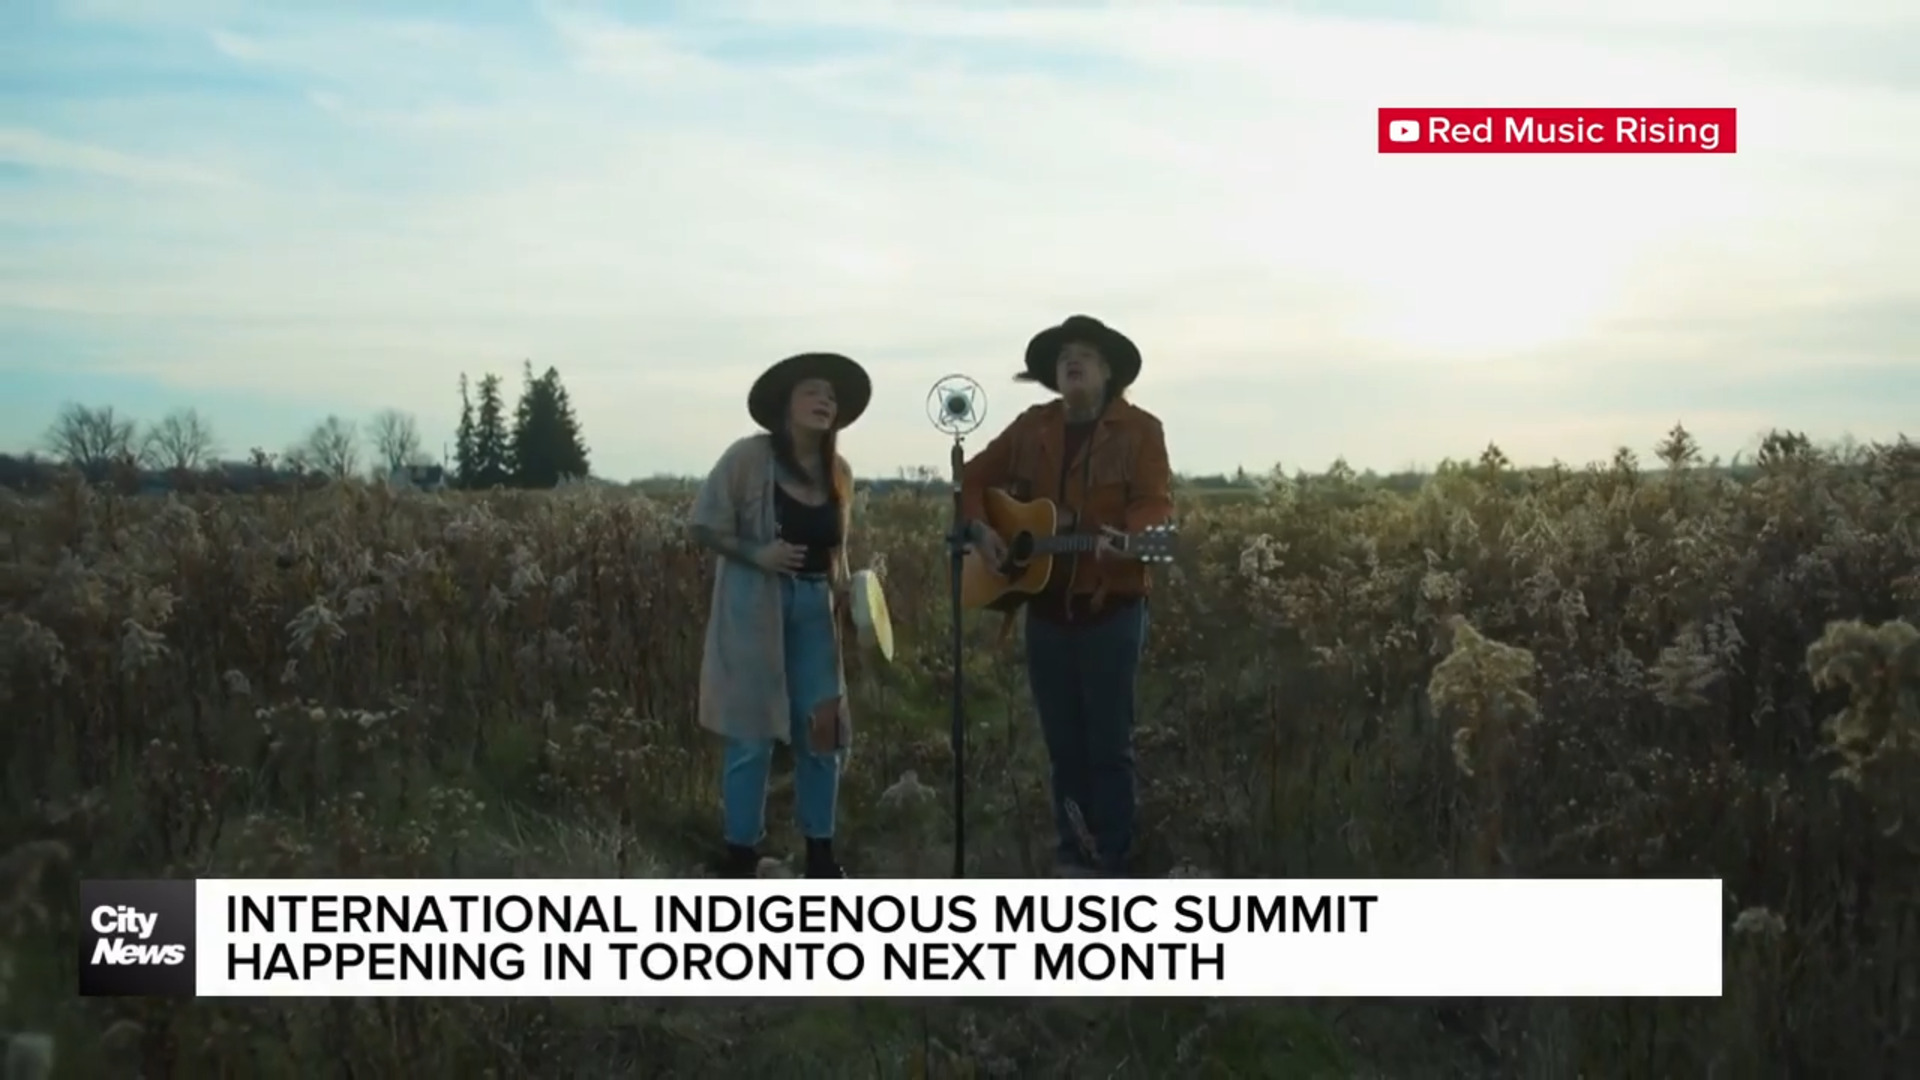 Toronto hosting an international Indigenous music summit